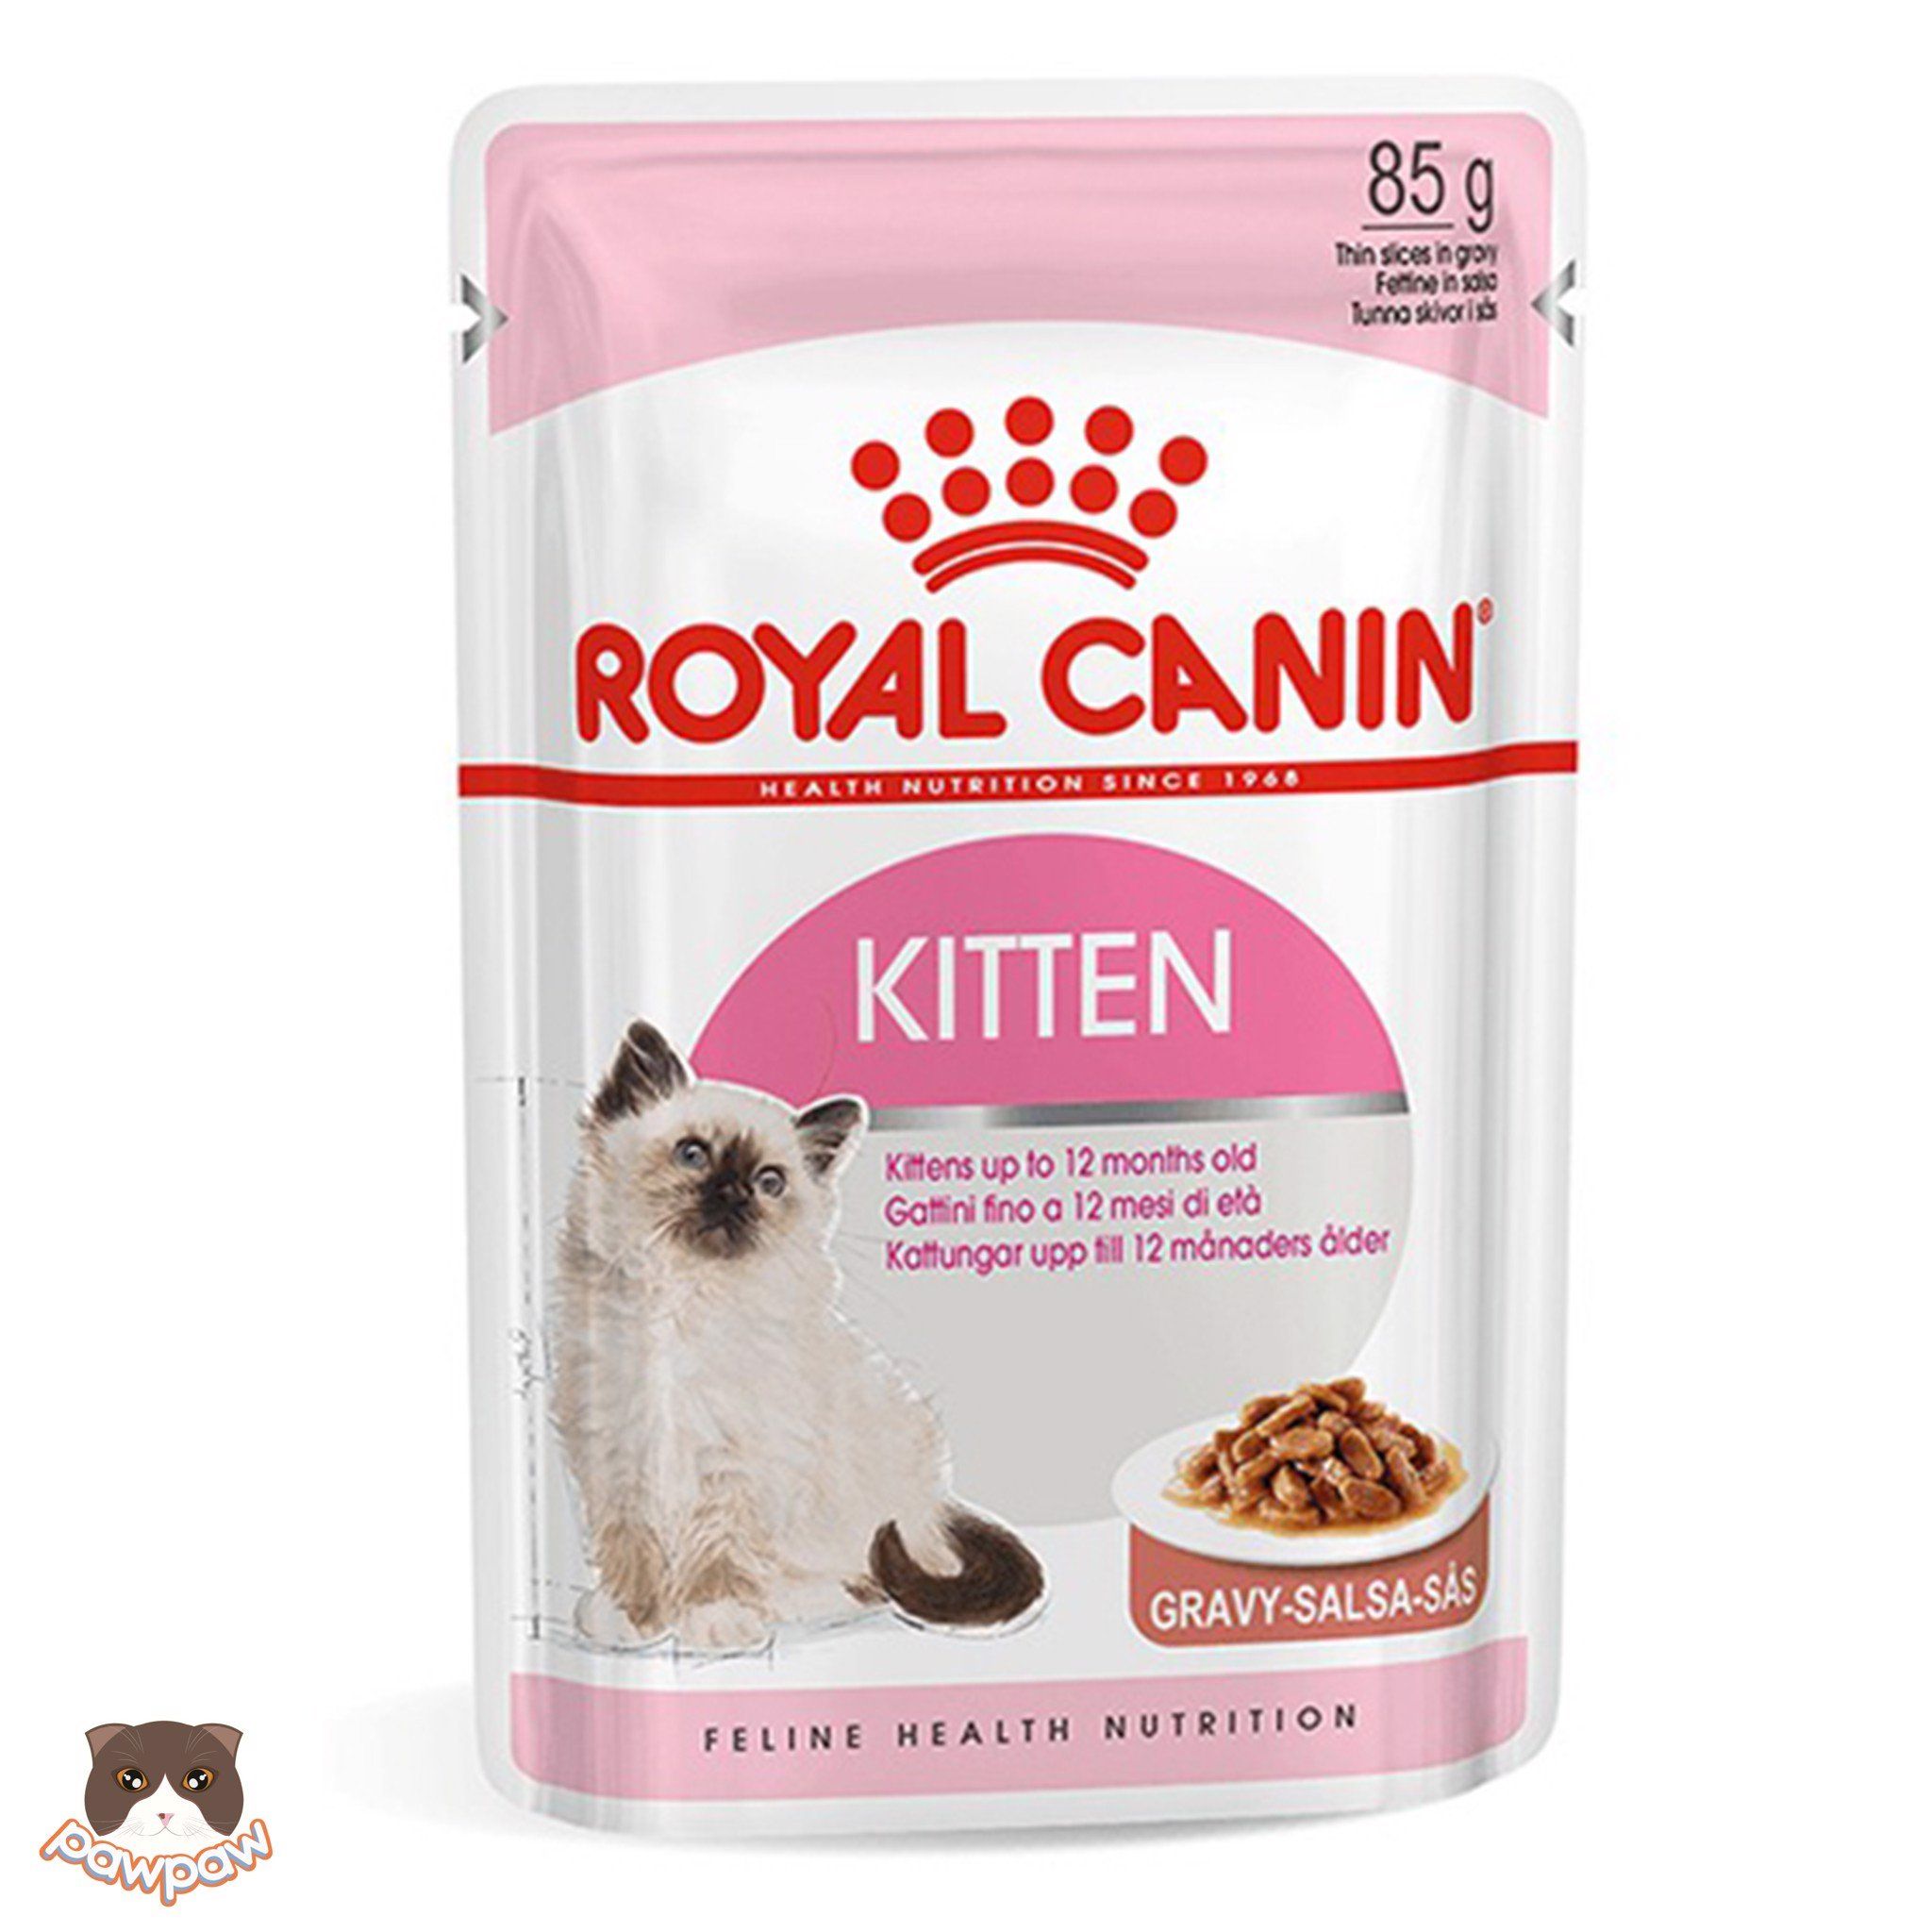  Pate Royal Canin Kitten Instinctive 85g cho mèo con 